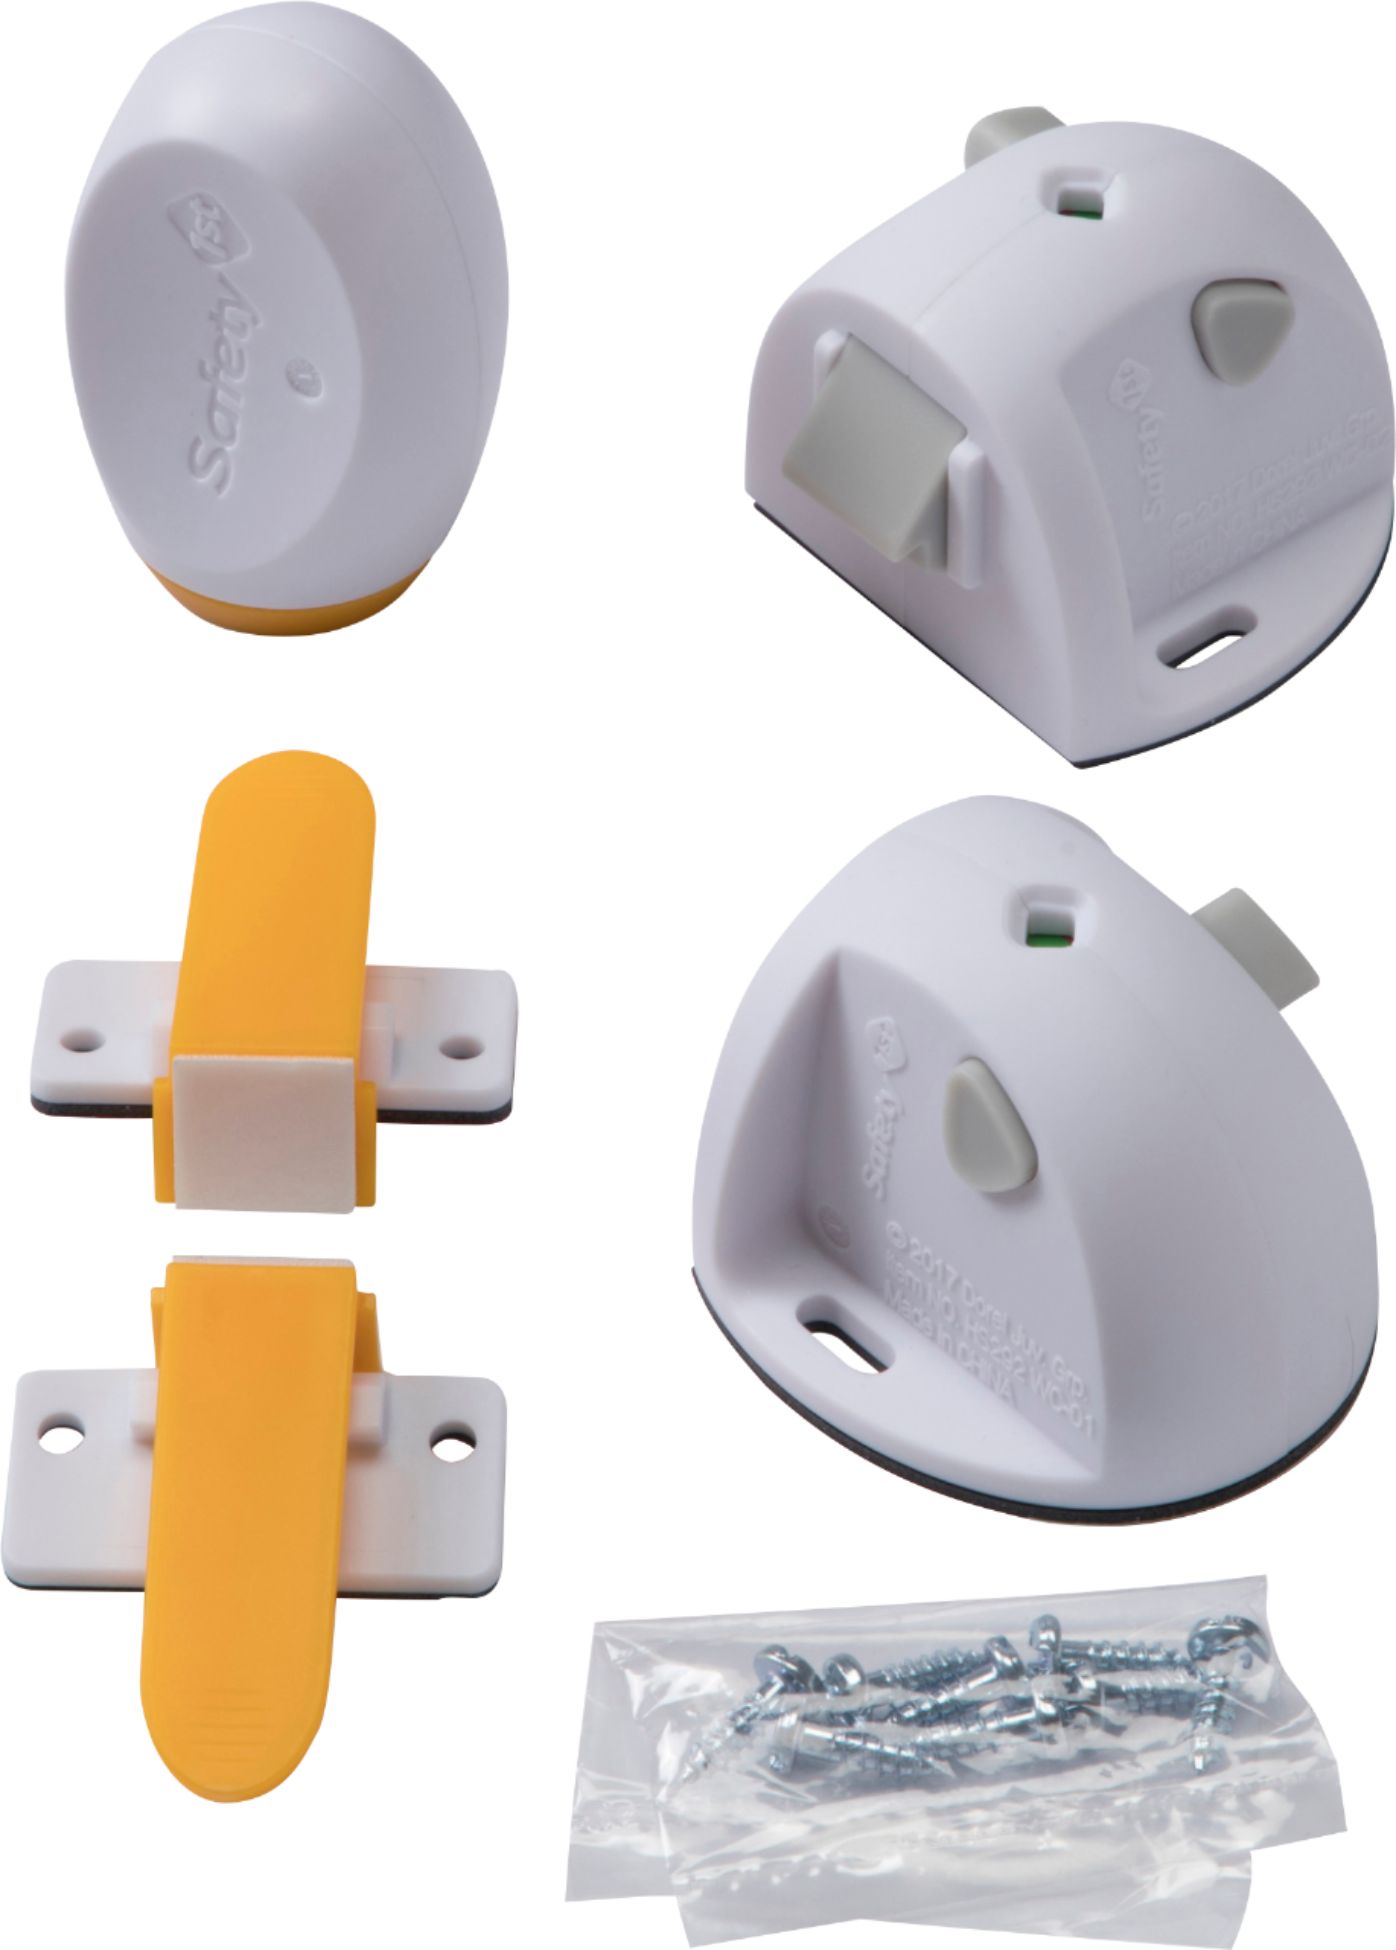 Safety 1st Adhesive Magnetic Lock System - 16 Locks & 4 Keys, White